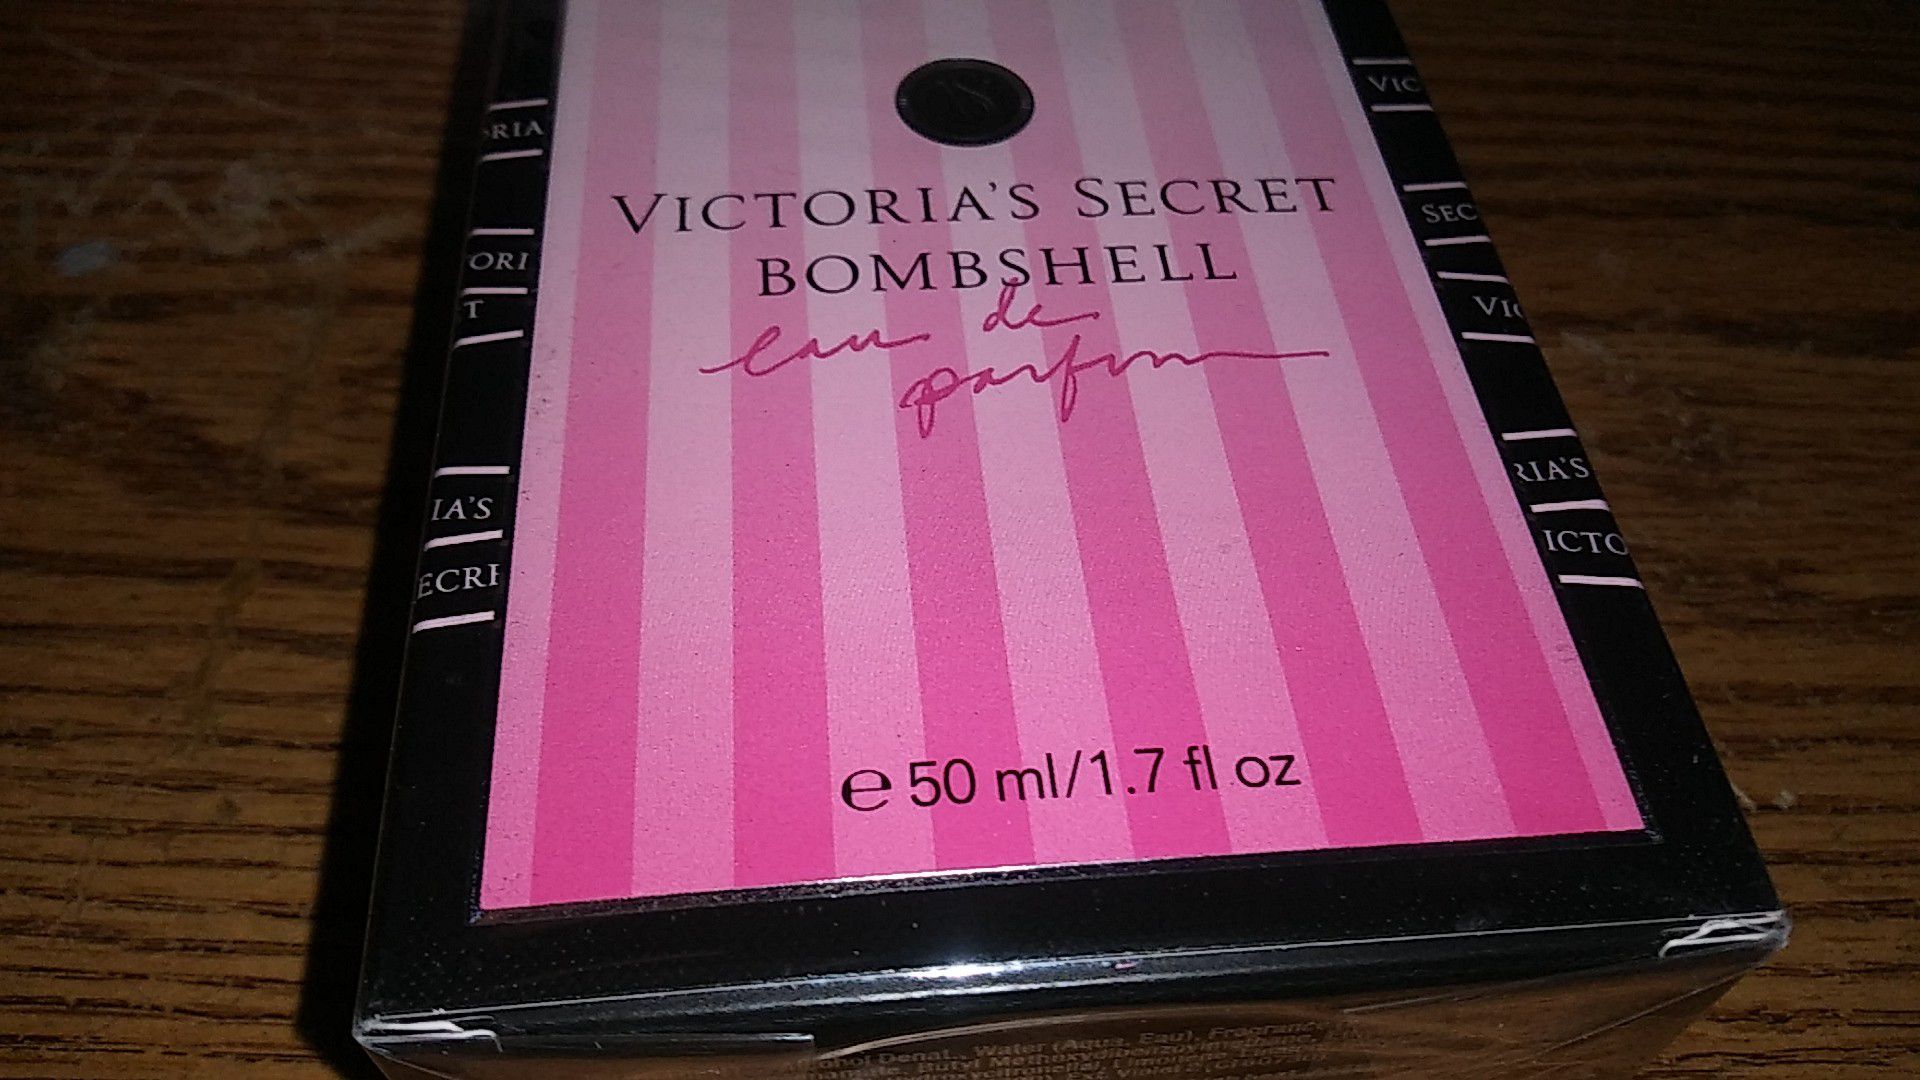 Victoria's Secret Bombshell 1.7 fl oz